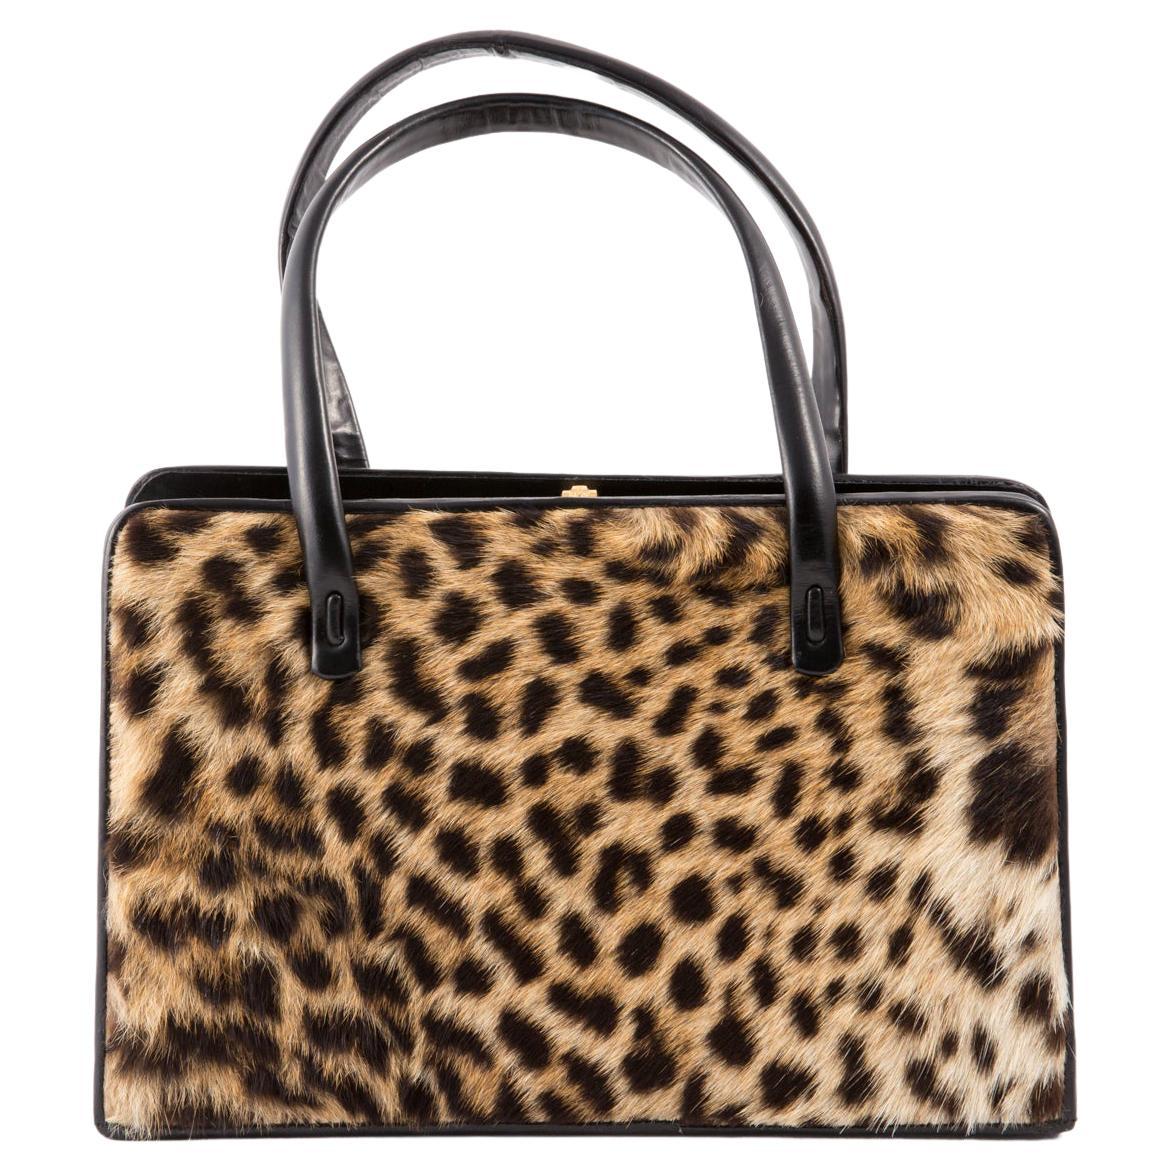 Friis & Company Frame Bag brown-cream leopard pattern elegant Bags Frame Bags 